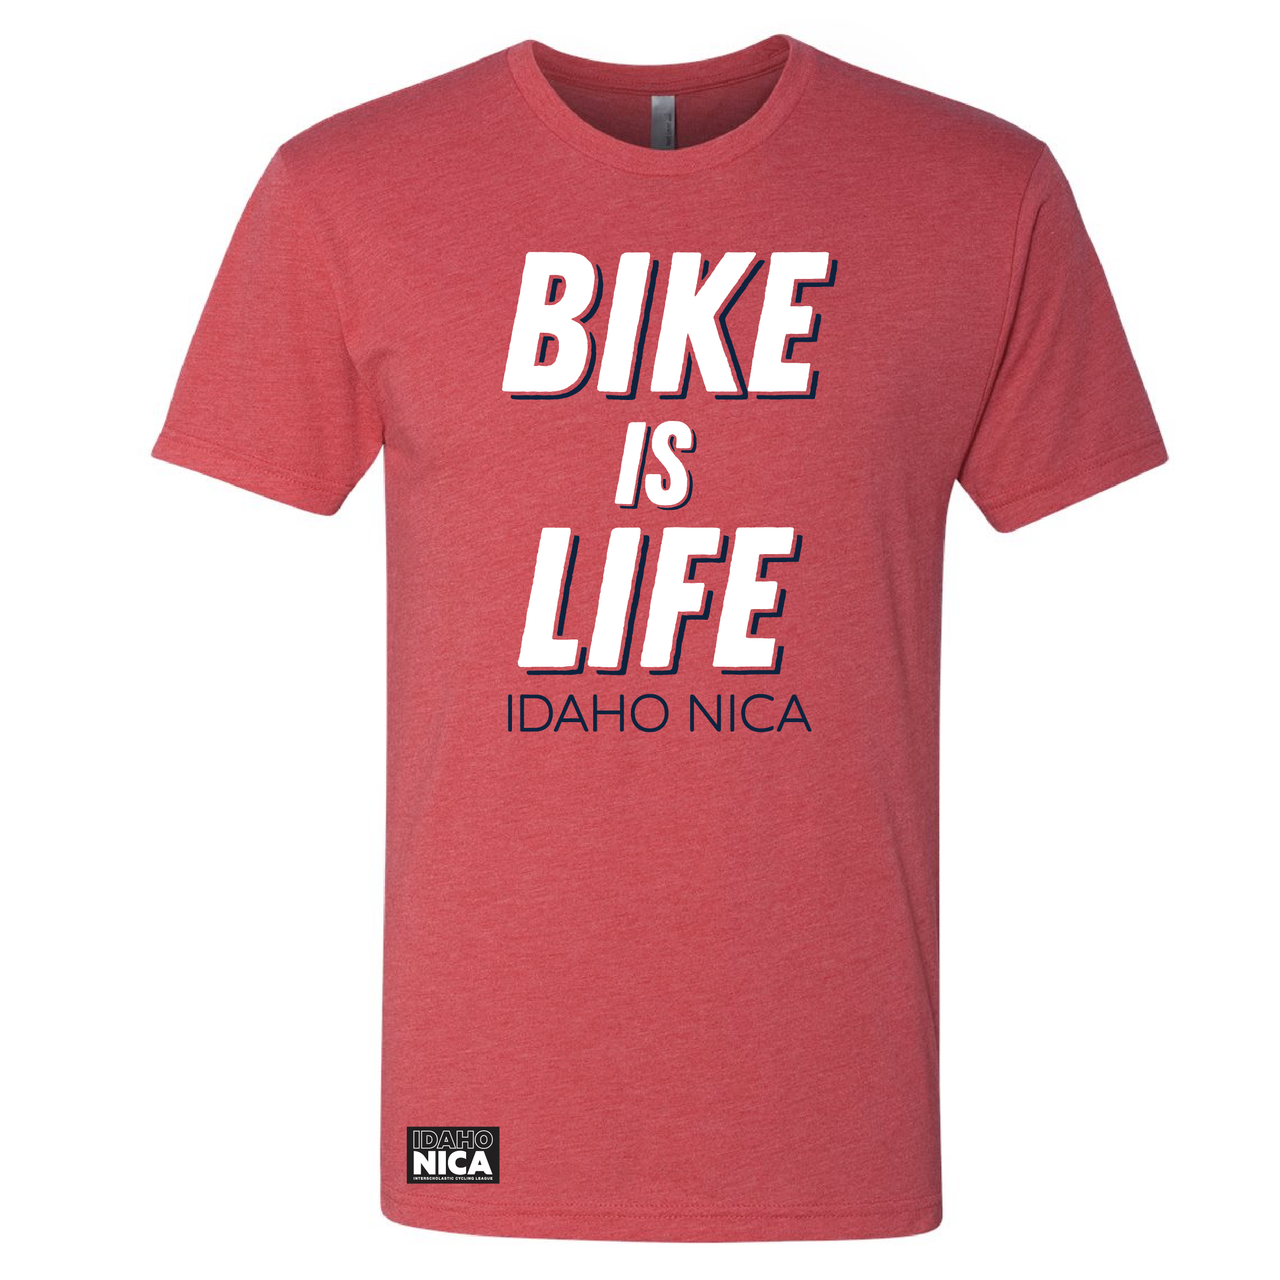 Idaho NICA Bike is Life Tee